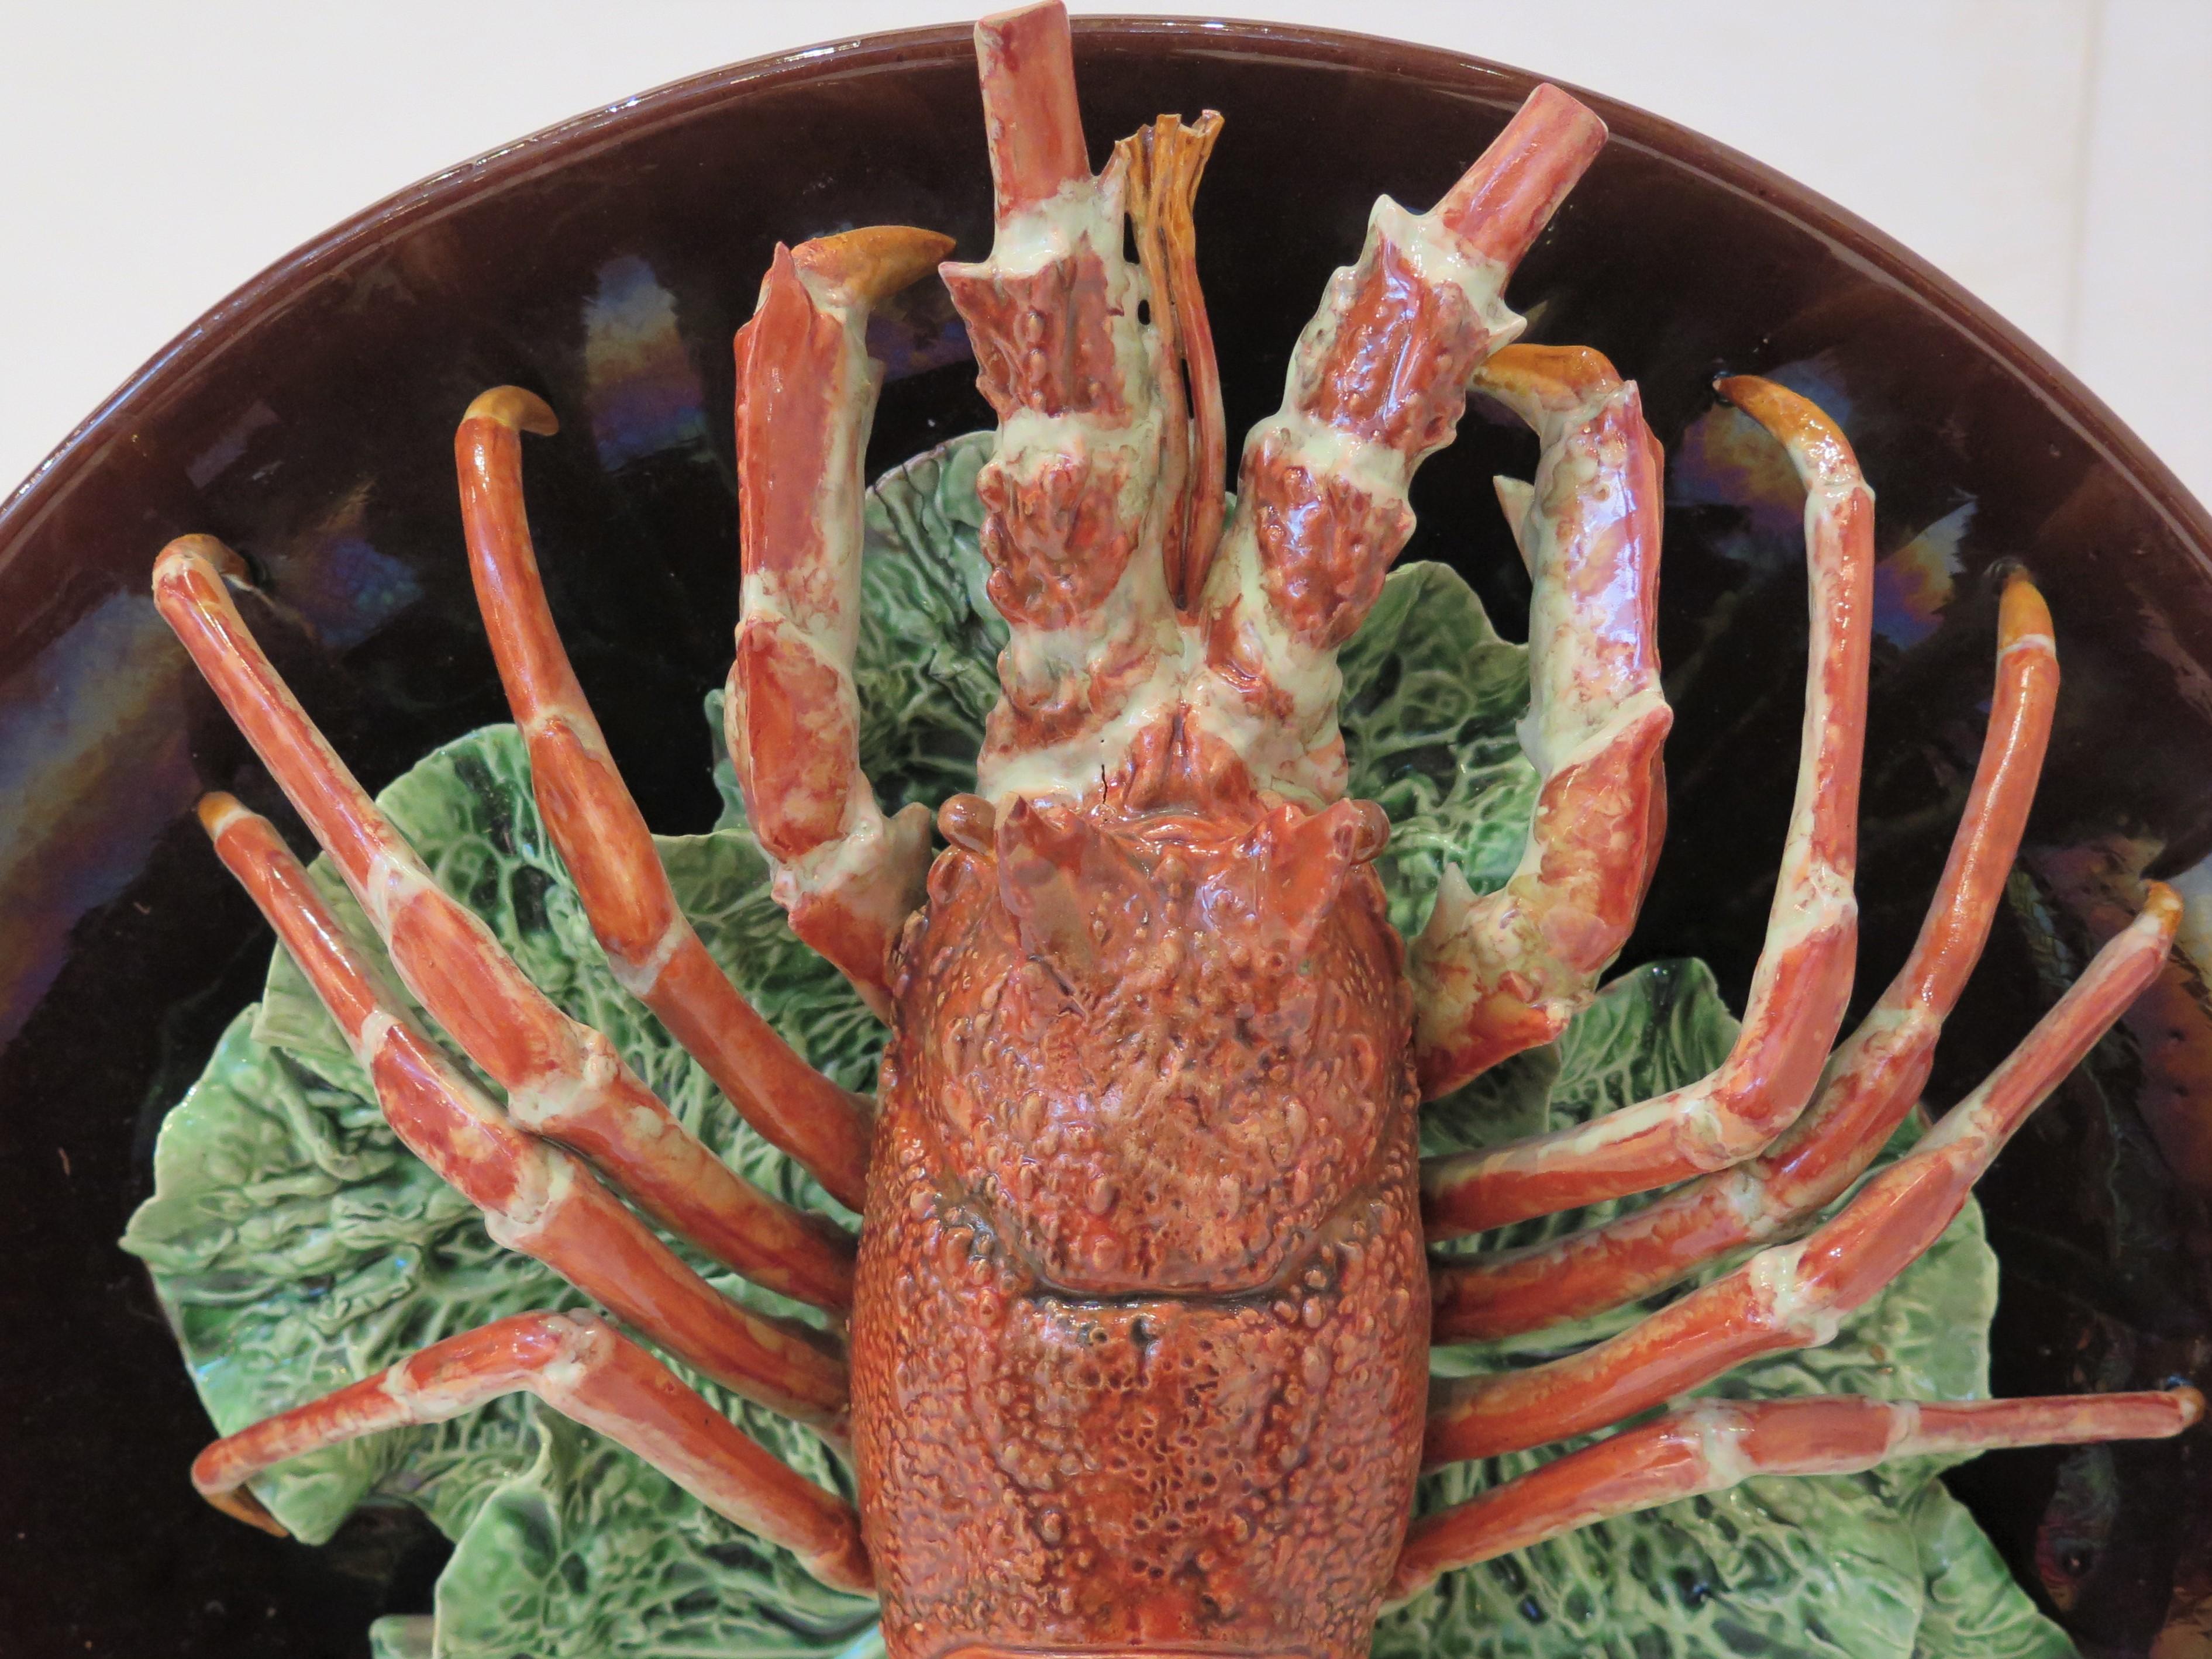 large-scale / grand VERY RARE single lobster on cabbage by artist / ceramist Rafael Bordalo Pinheiro (Portugal, 1846-1905), Portuguese Palissy ware / majolica from Caldas da Rainha, Portugal, 1887

impressed verso with mark, 